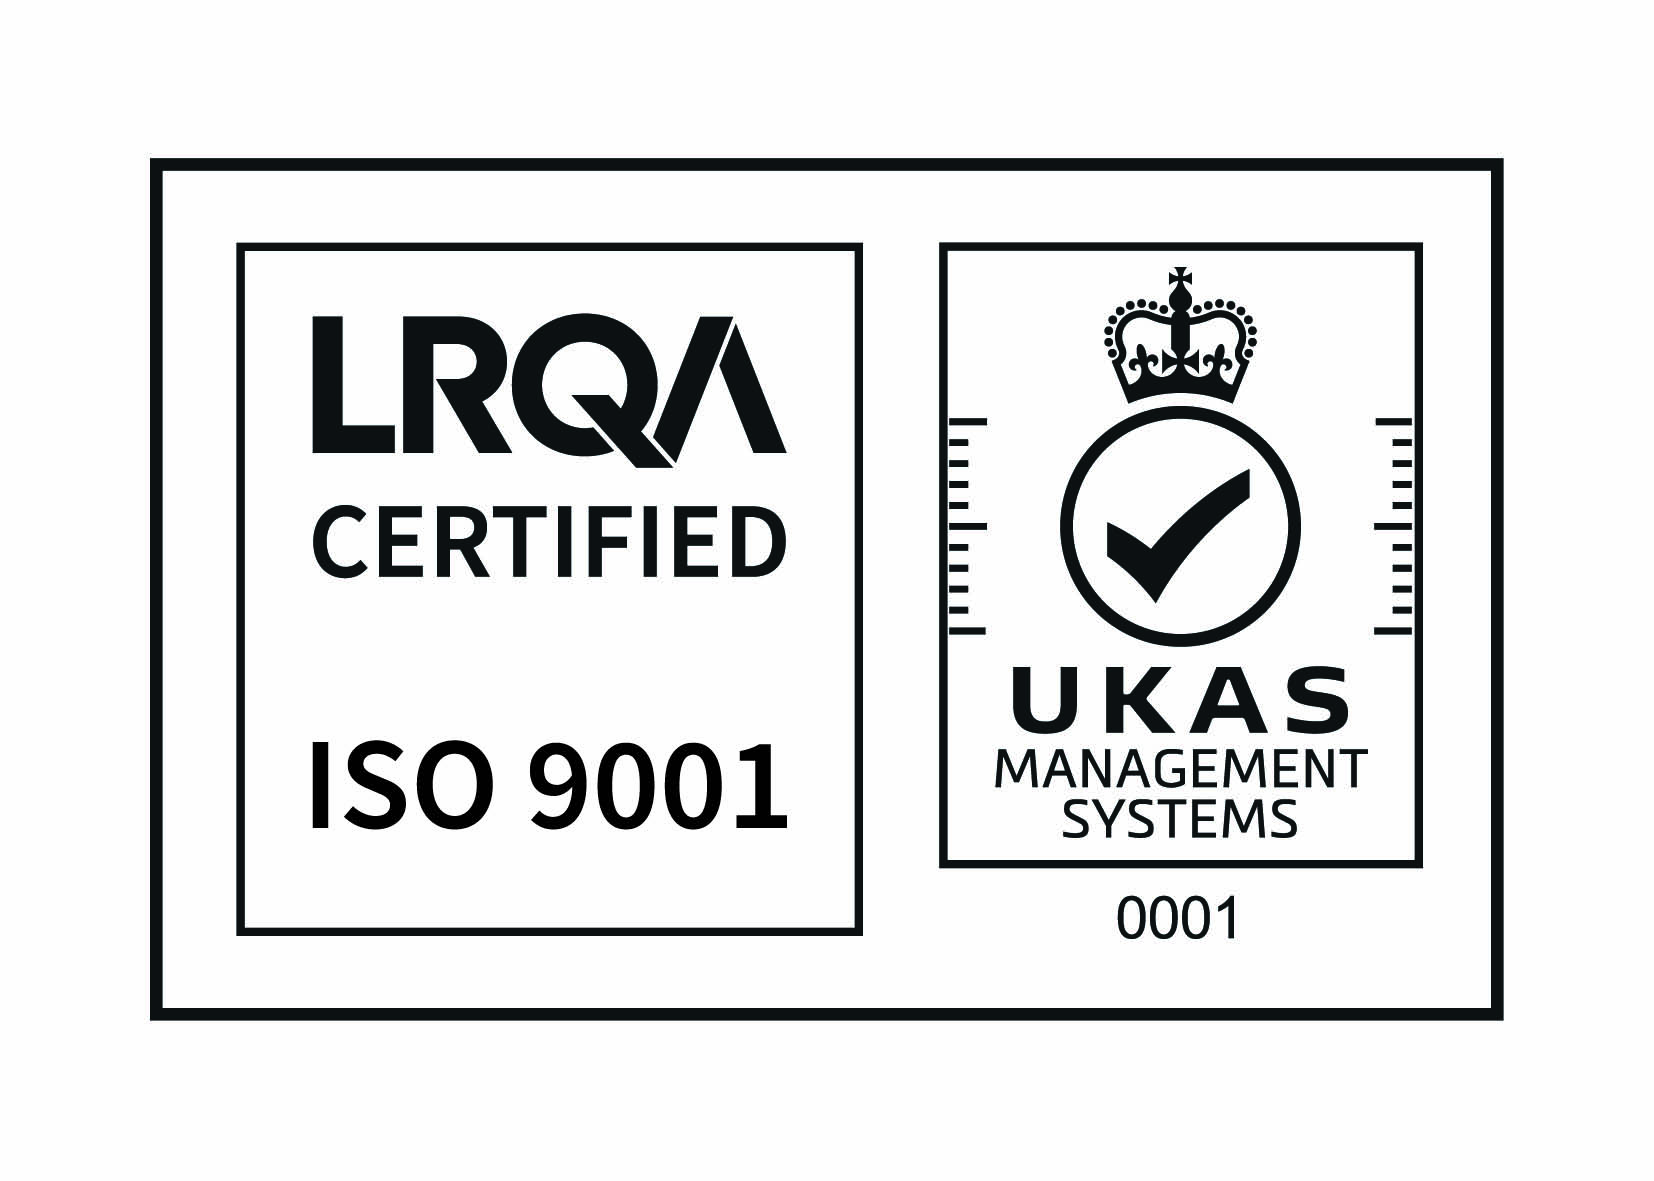 UKAS AND ISO 9001 - CMYK